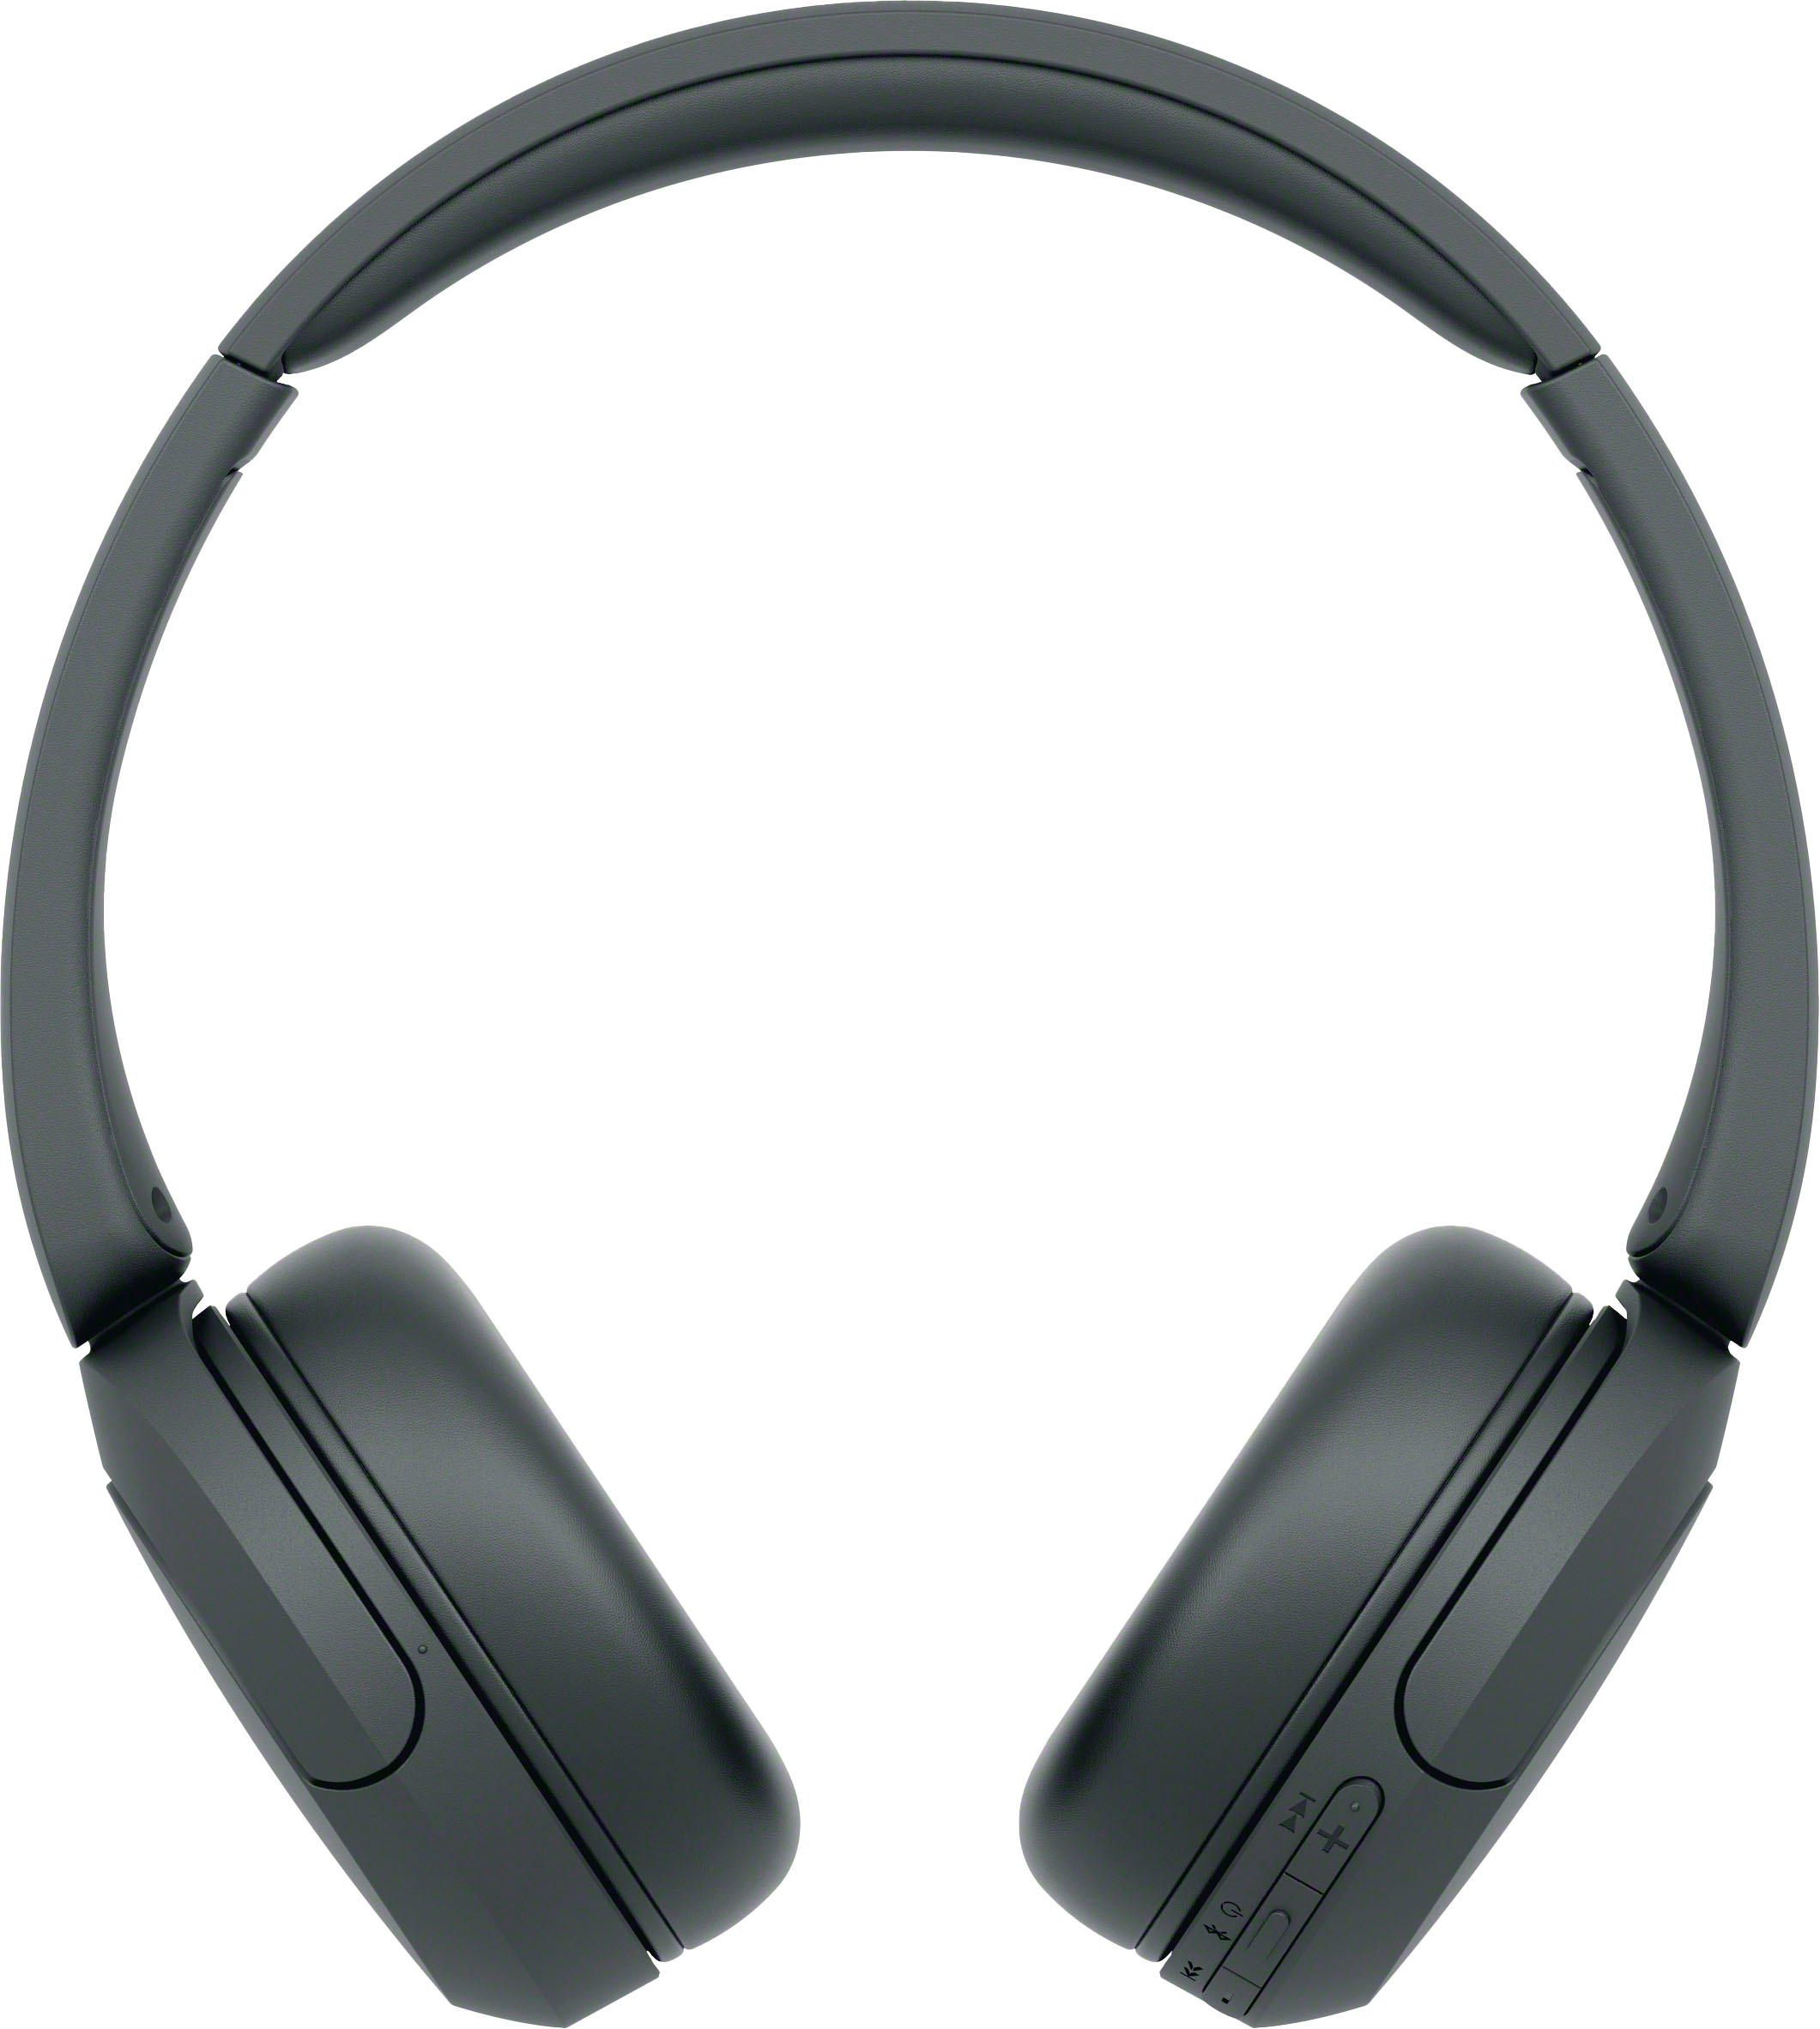 Sony WH-CH520 Headphone Wireless Best Microphone Buy with - WHCH520/B Black